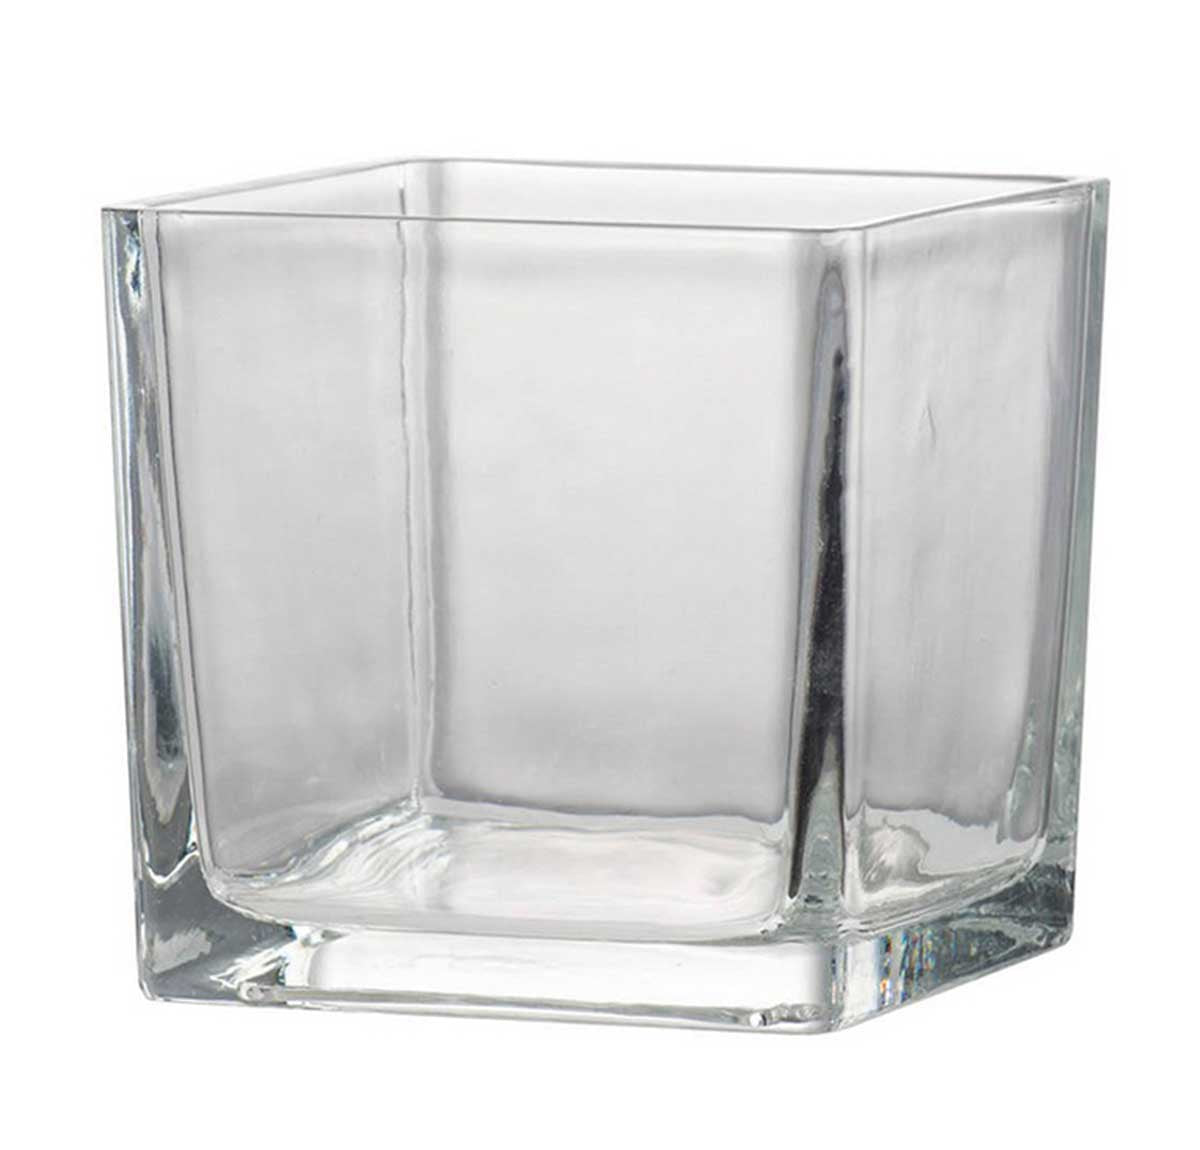 Classic Glass Square Vase - small | Vases & Urns | Home Decor